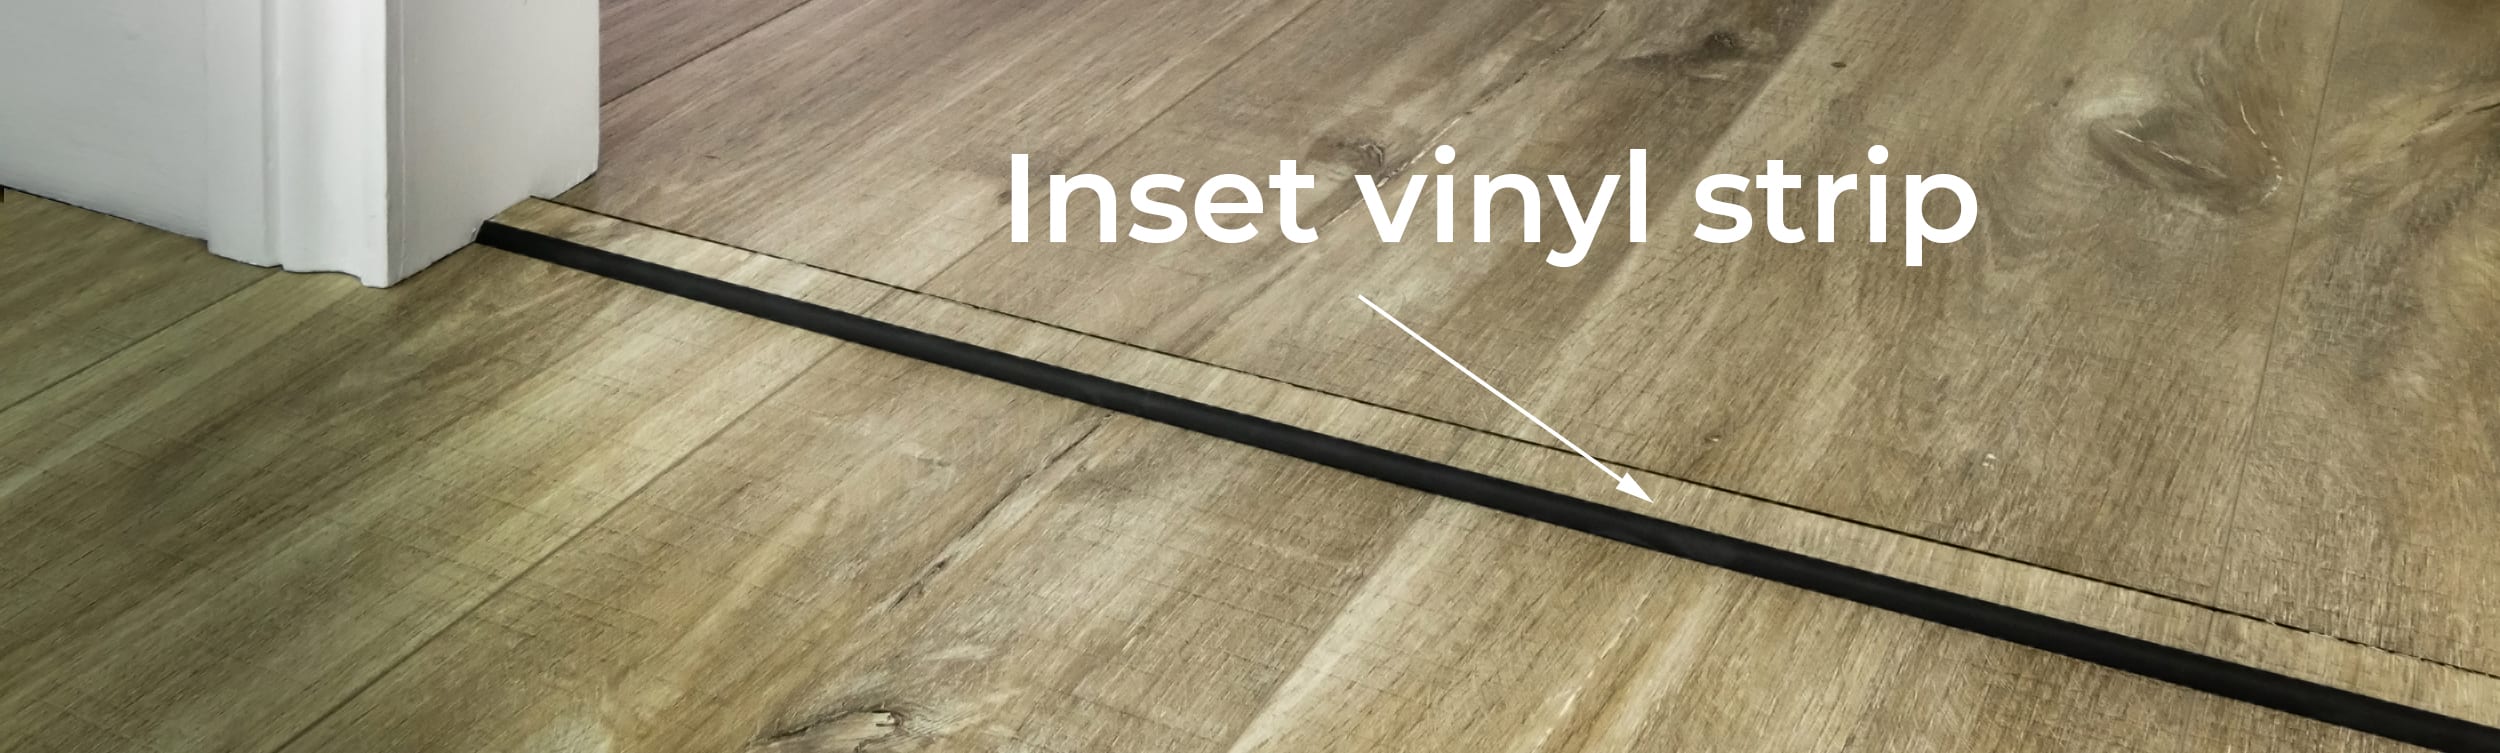 Transition Strips For Vinyl Flooring, Vinyl Plank Flooring Transition To Tile